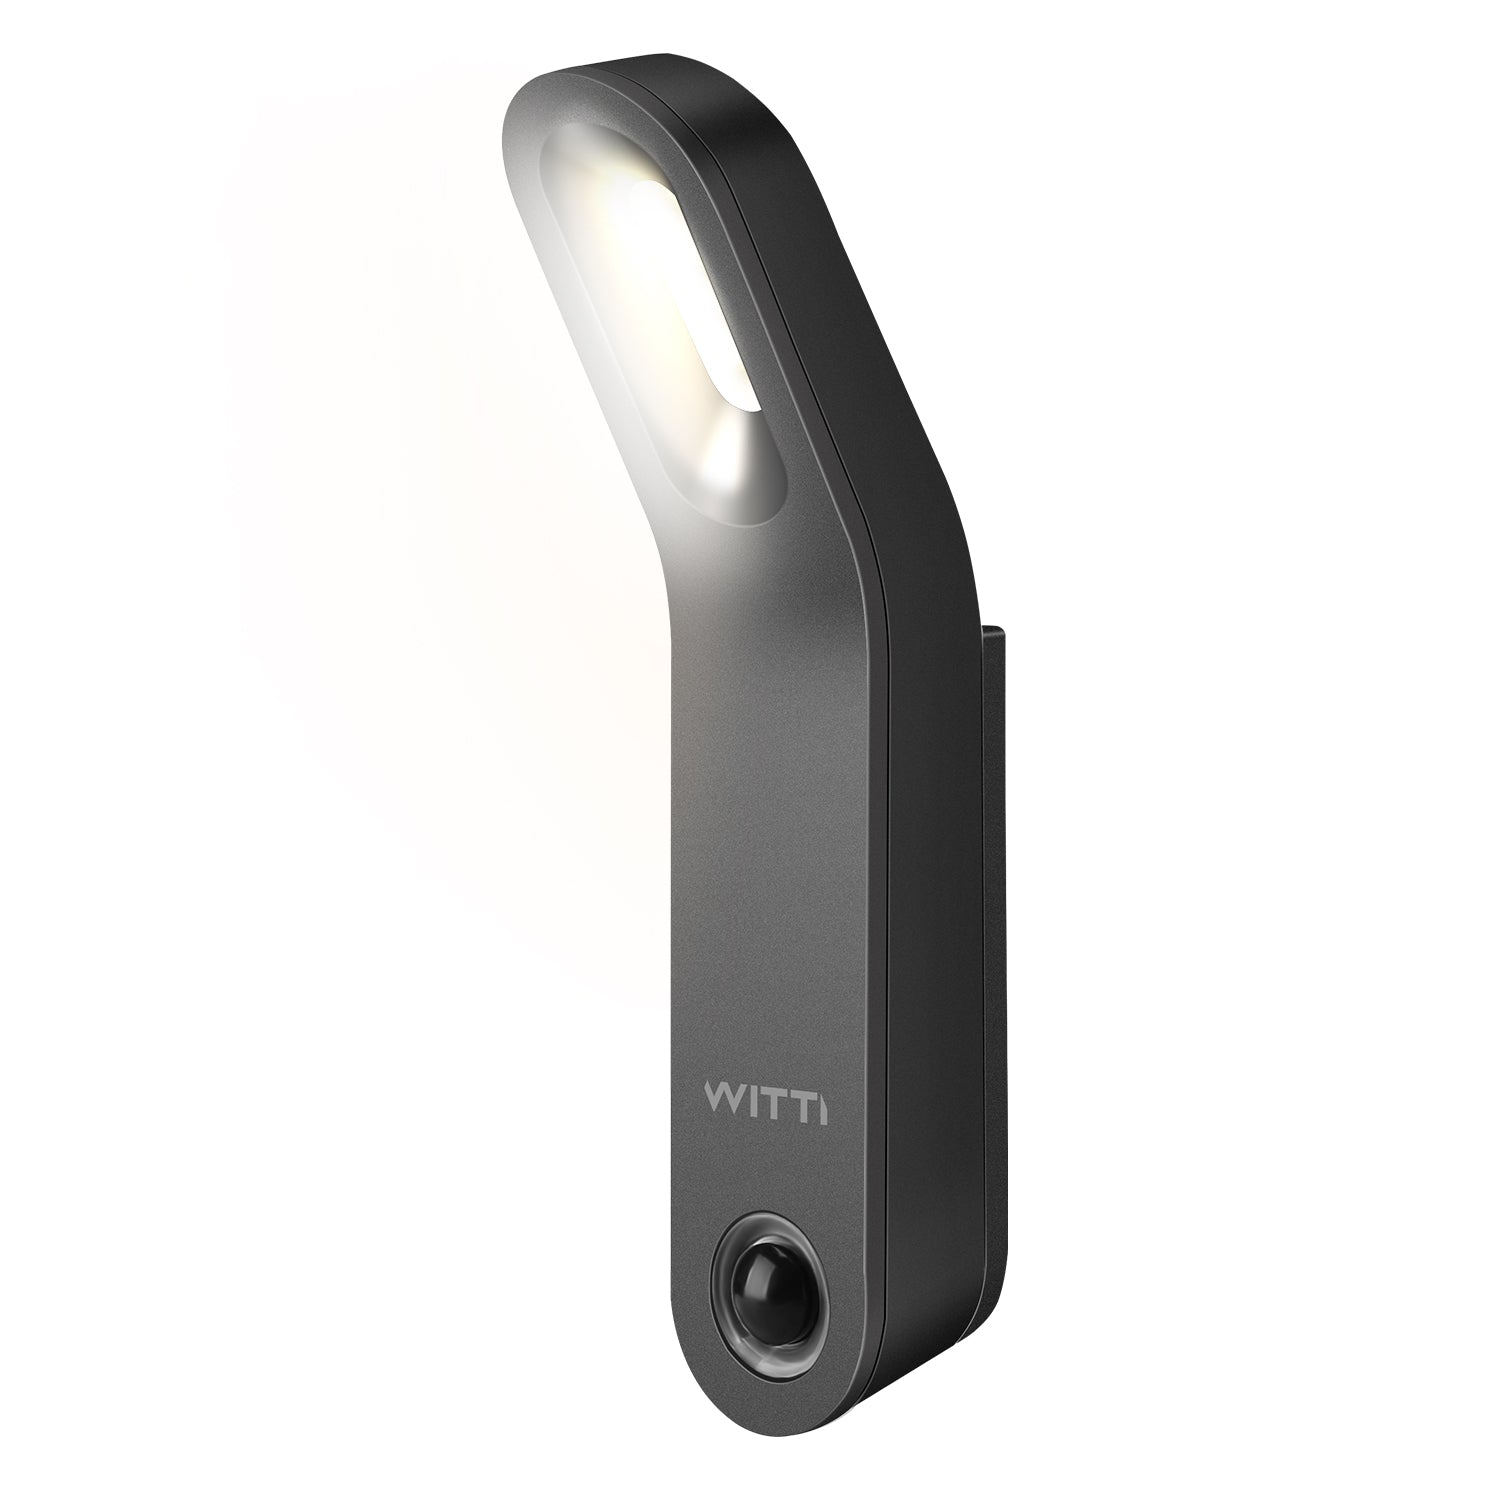 HANDI - Portable Night Light with Motion sensor